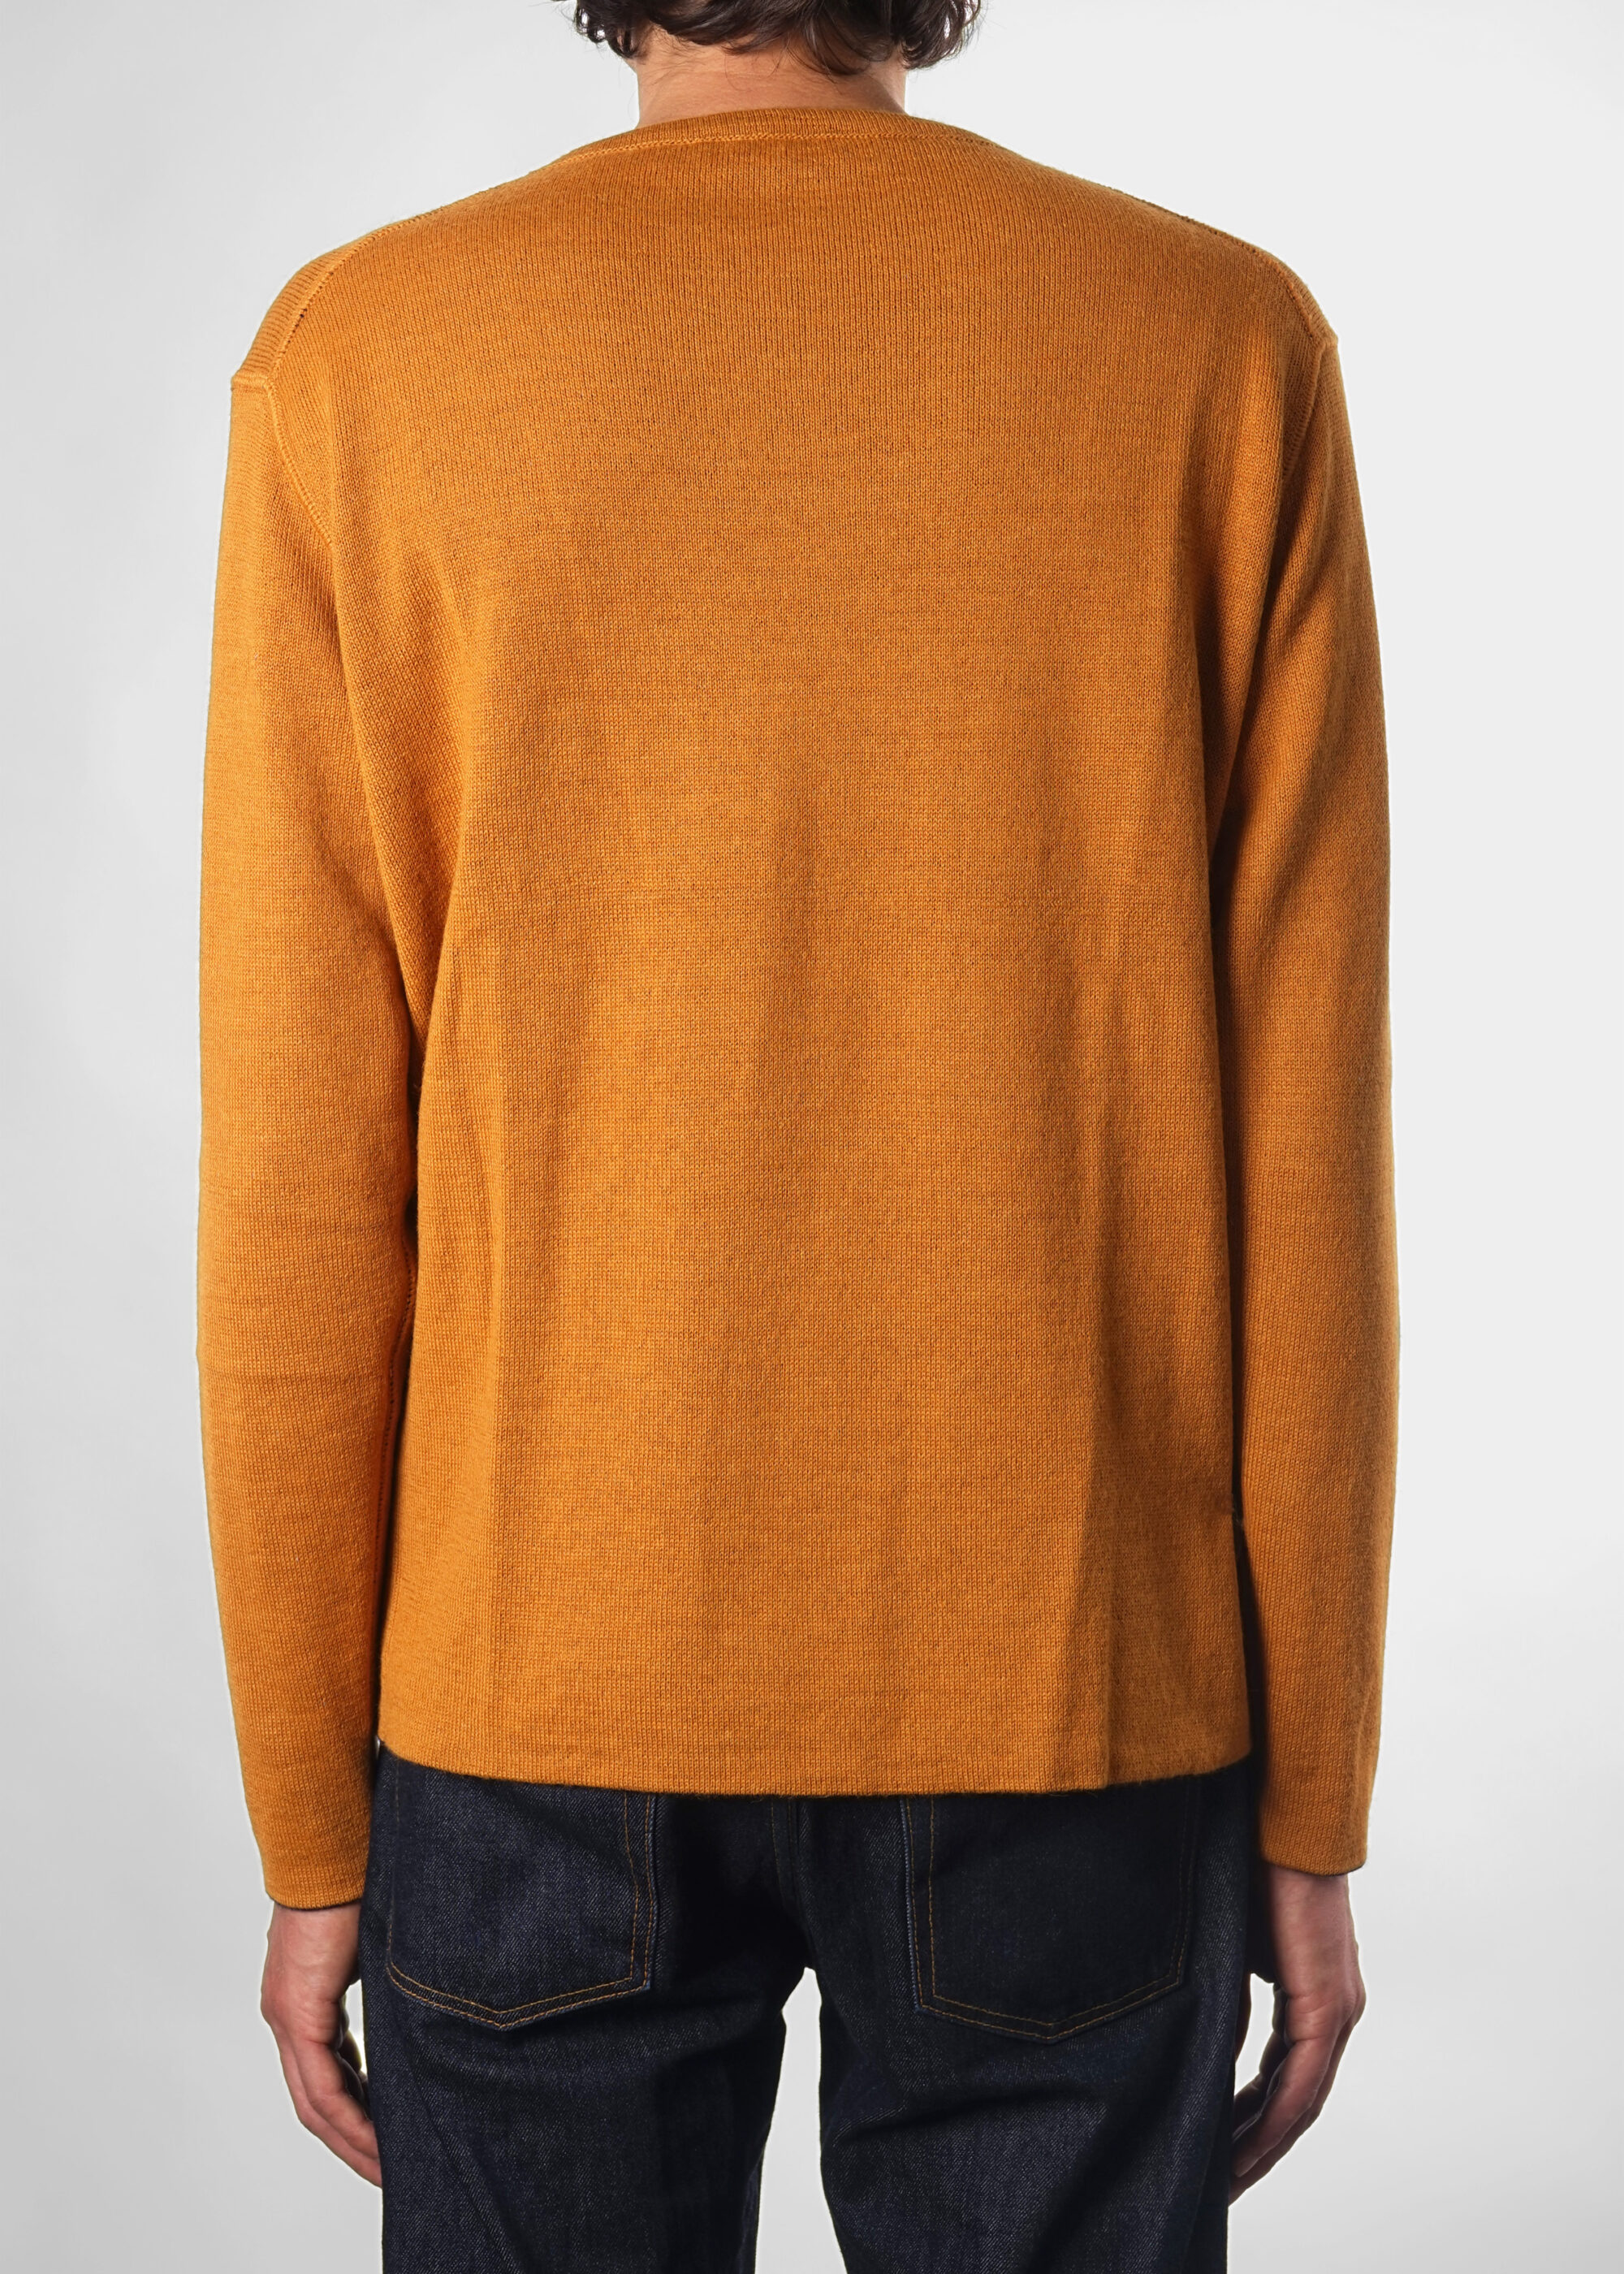 Product image for »Blauaras Ochre« Reversible Sweater Baby Alpaca | Navy Ochre